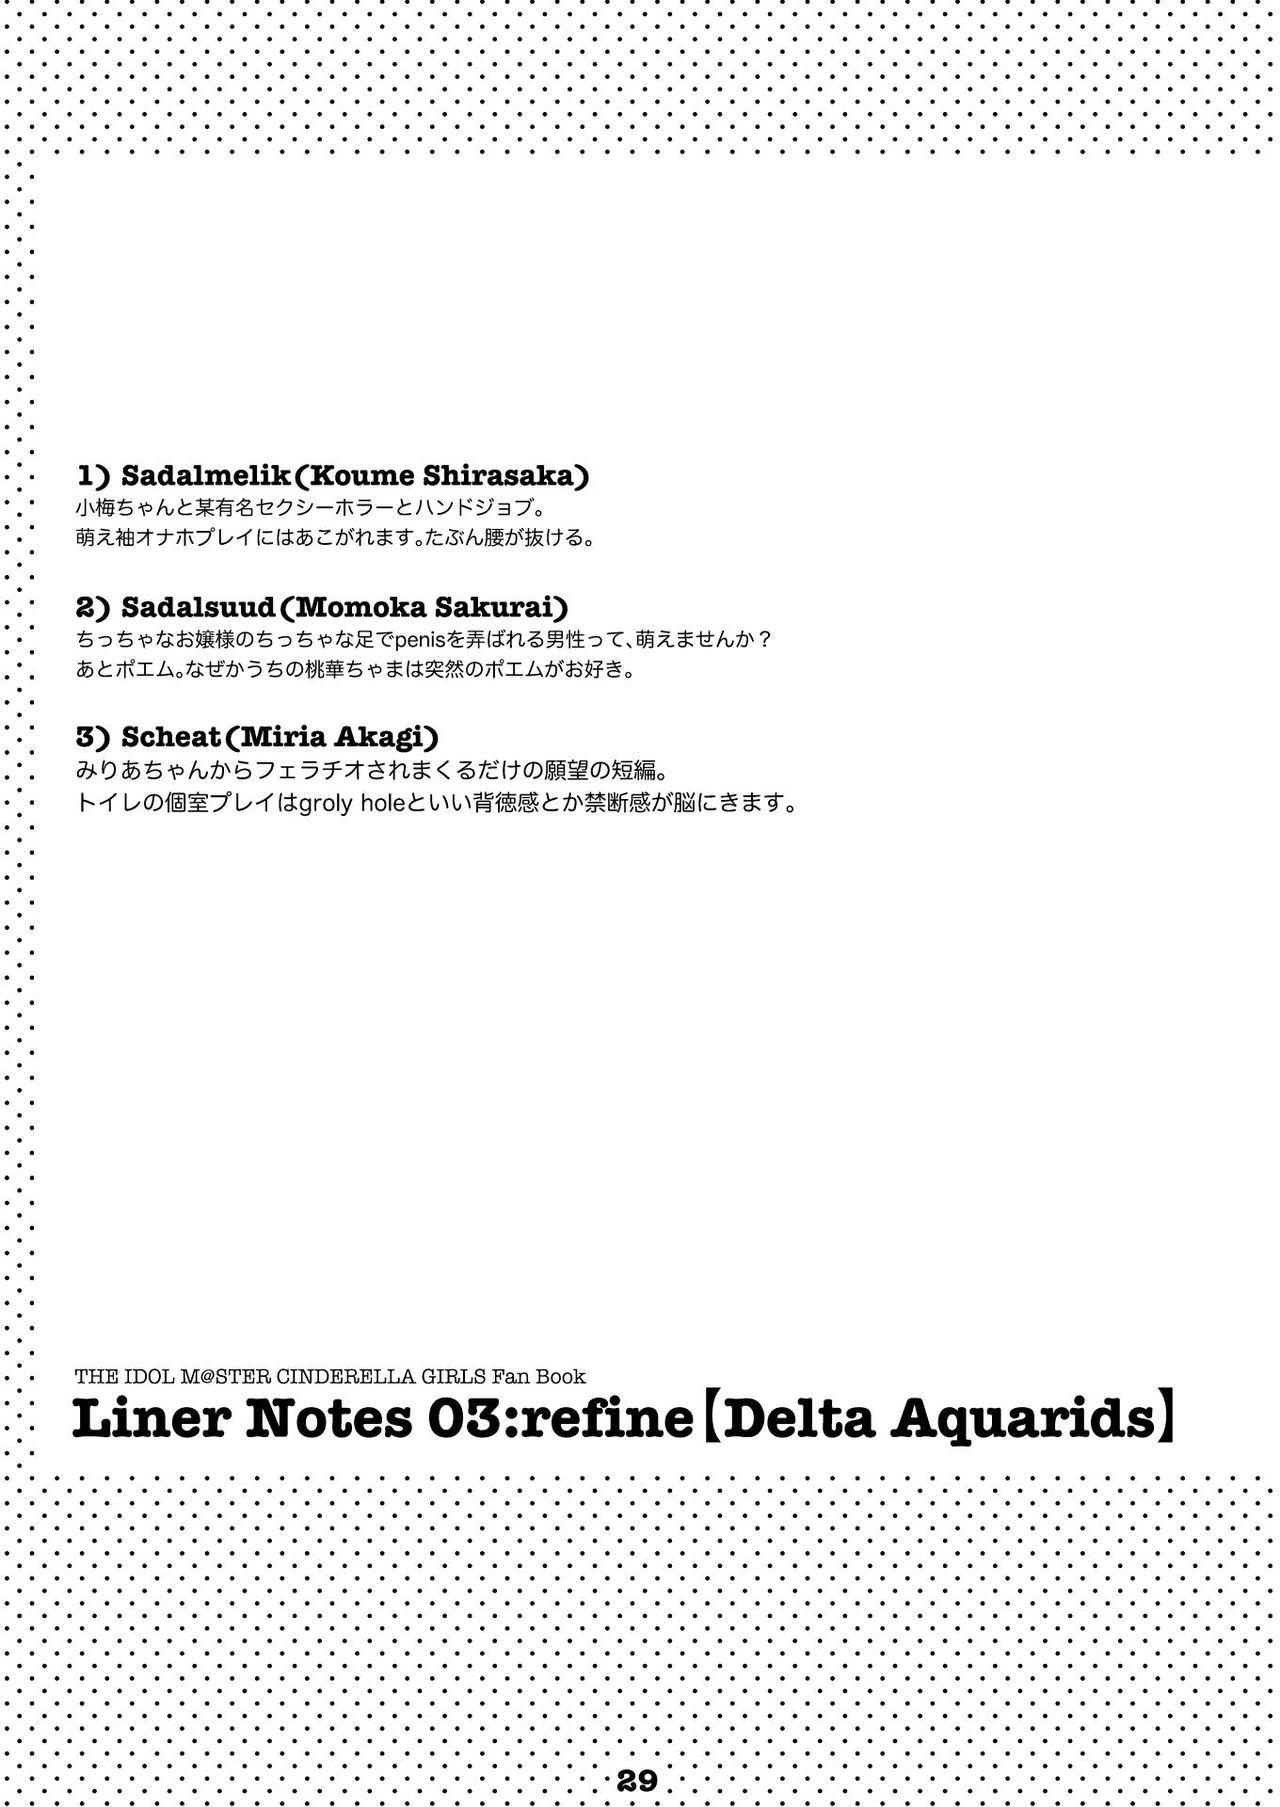 Liner Notes 03 29